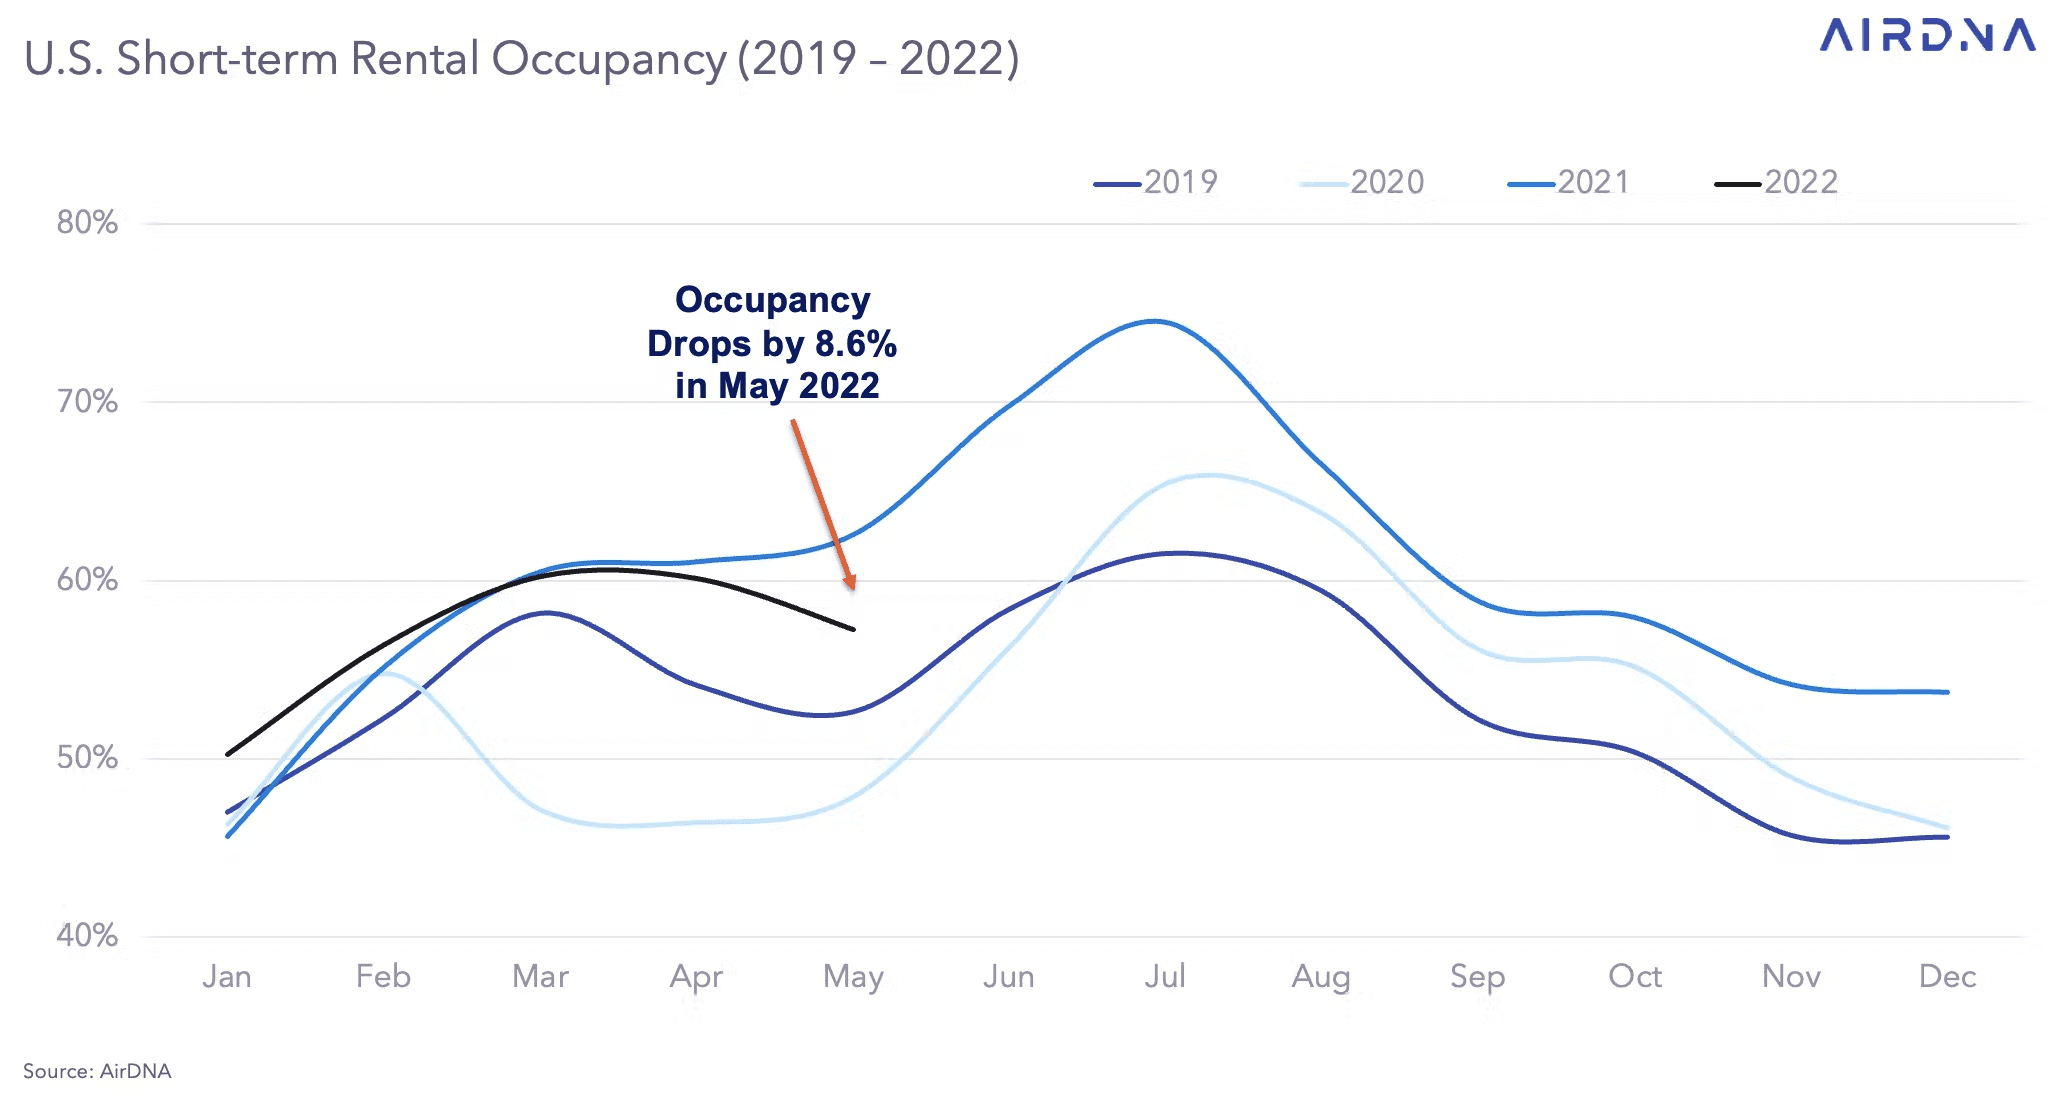 str occupancy rates